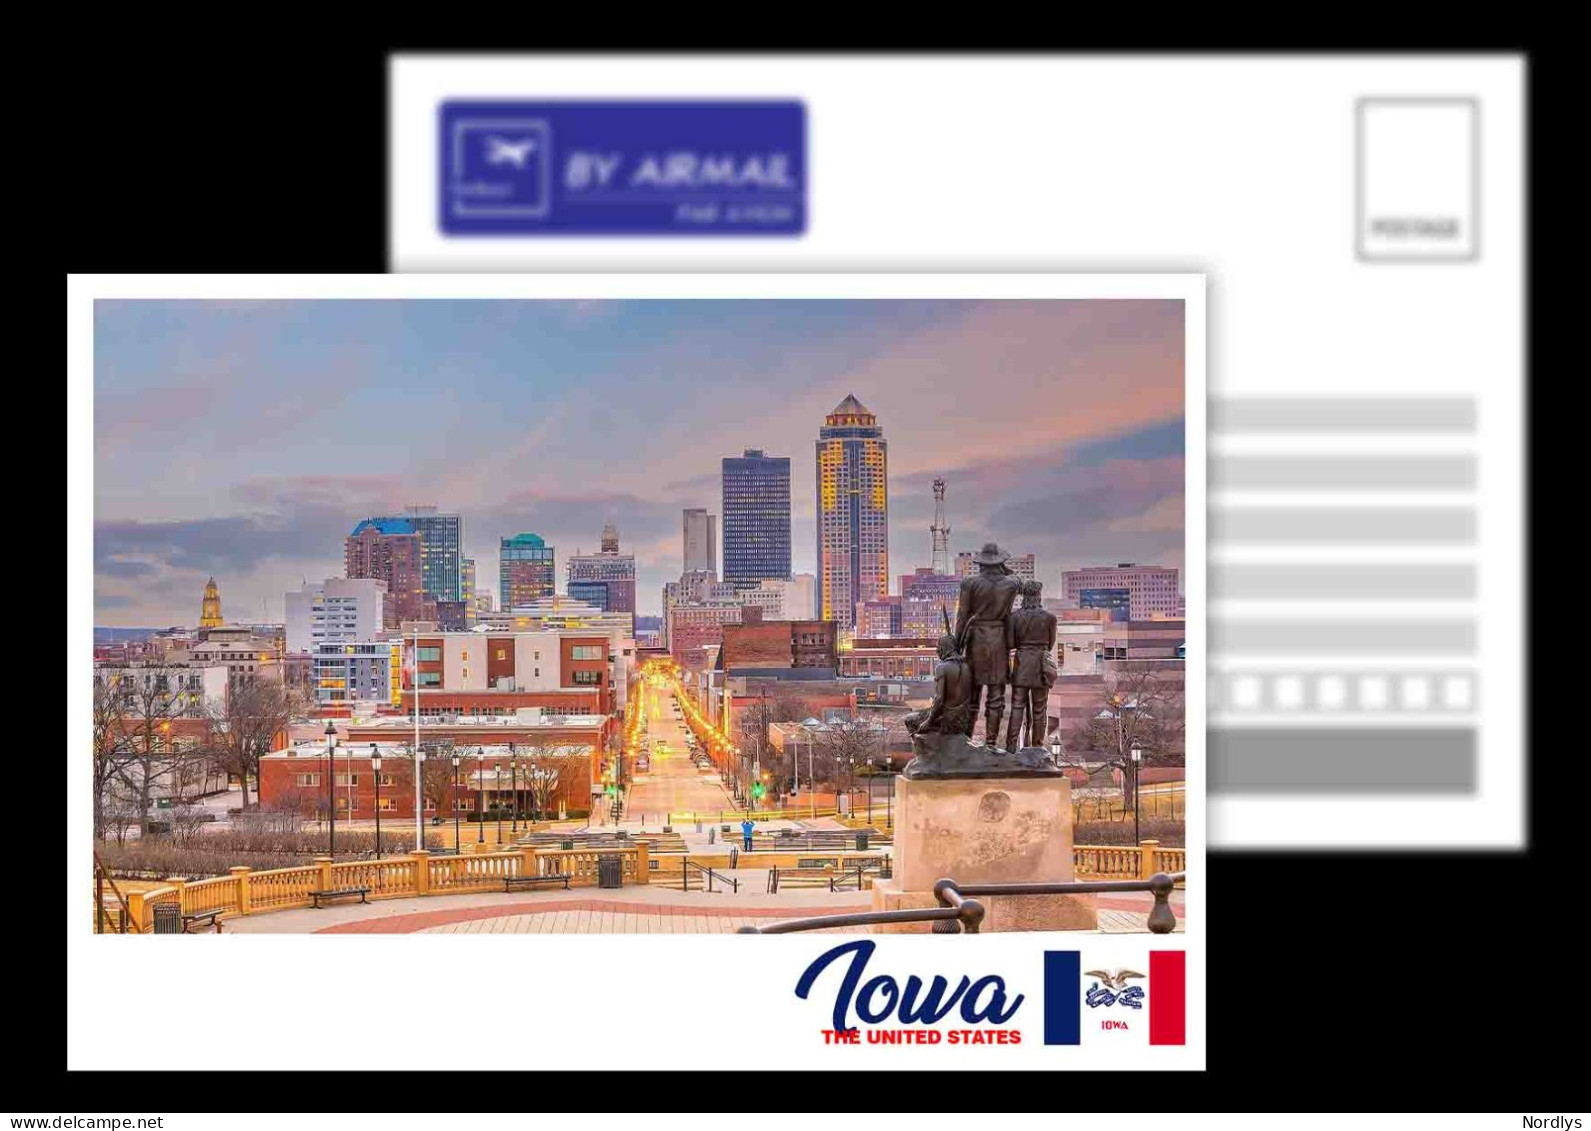 Iowa / US States / View Card - Des Moines